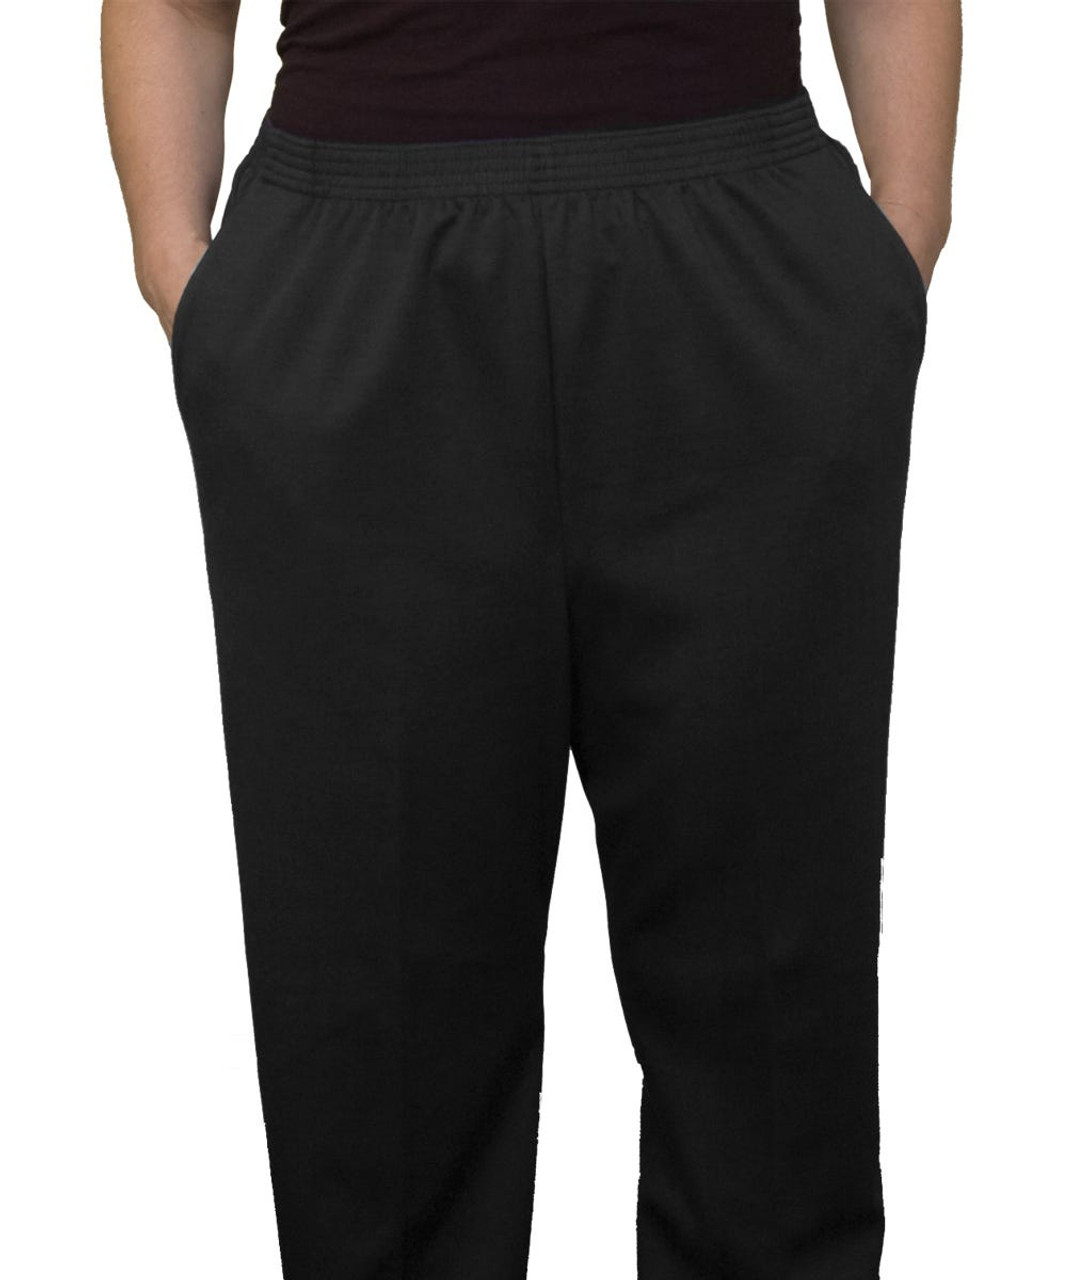 Silverts SV13410 Women's Pull On Elastic Waist Pants with Pockets Black, Size=4XL, SV13410-SV2-4XL